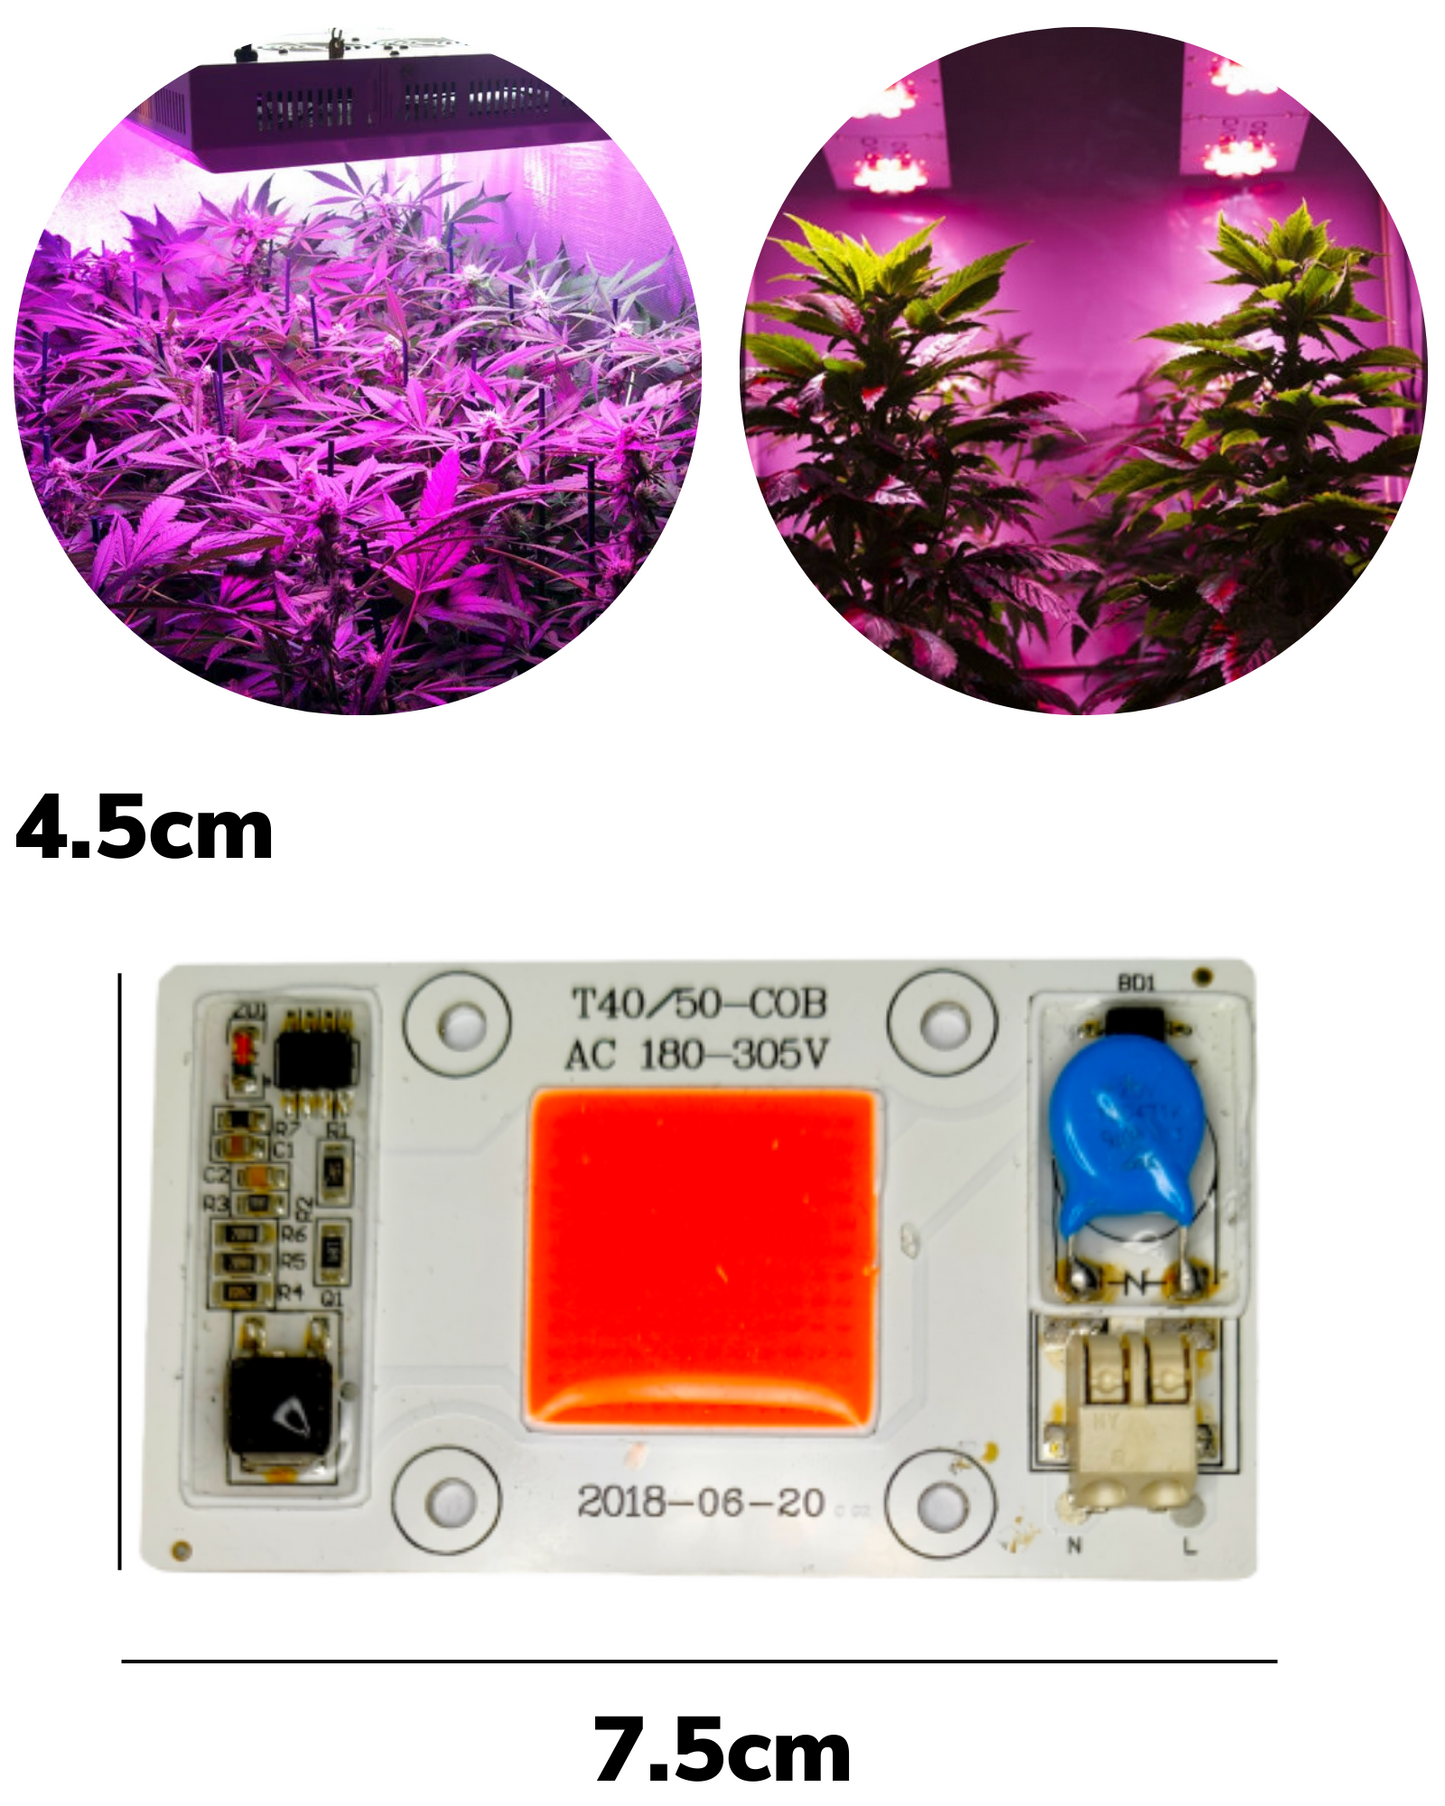 Chip LED de potencia 50W 7744 para Cultivo de plantas | Full spectrum | Espectro completo para invernadero